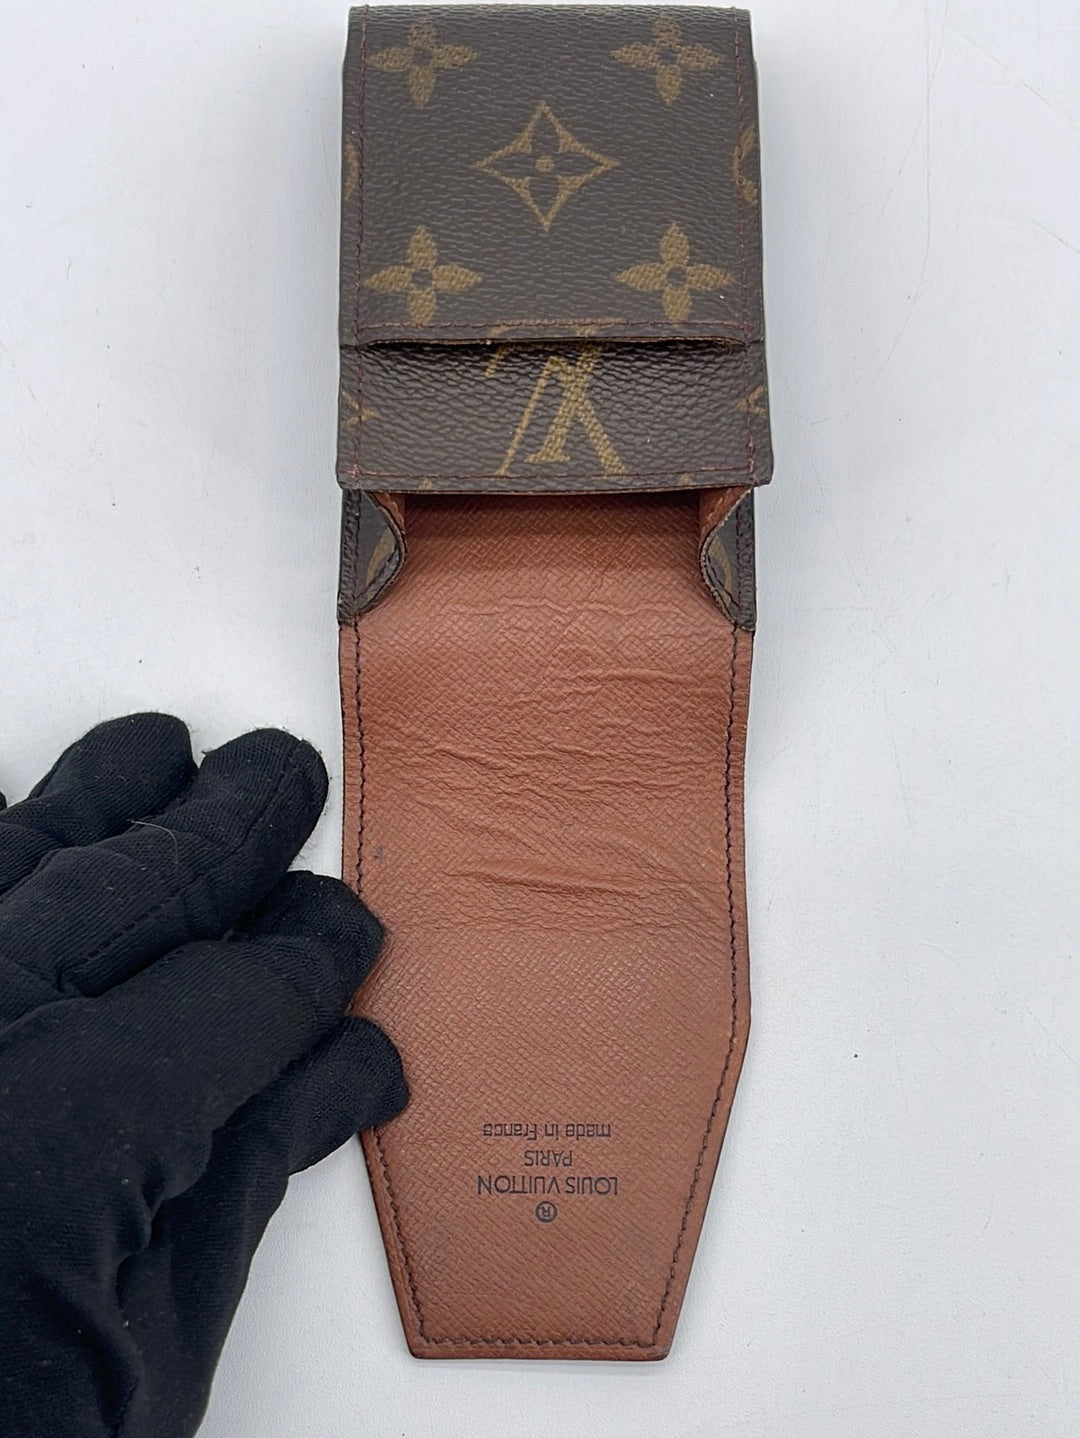 Preloved Louis Vuitton Monogram Tobacco Case CT0043 100223